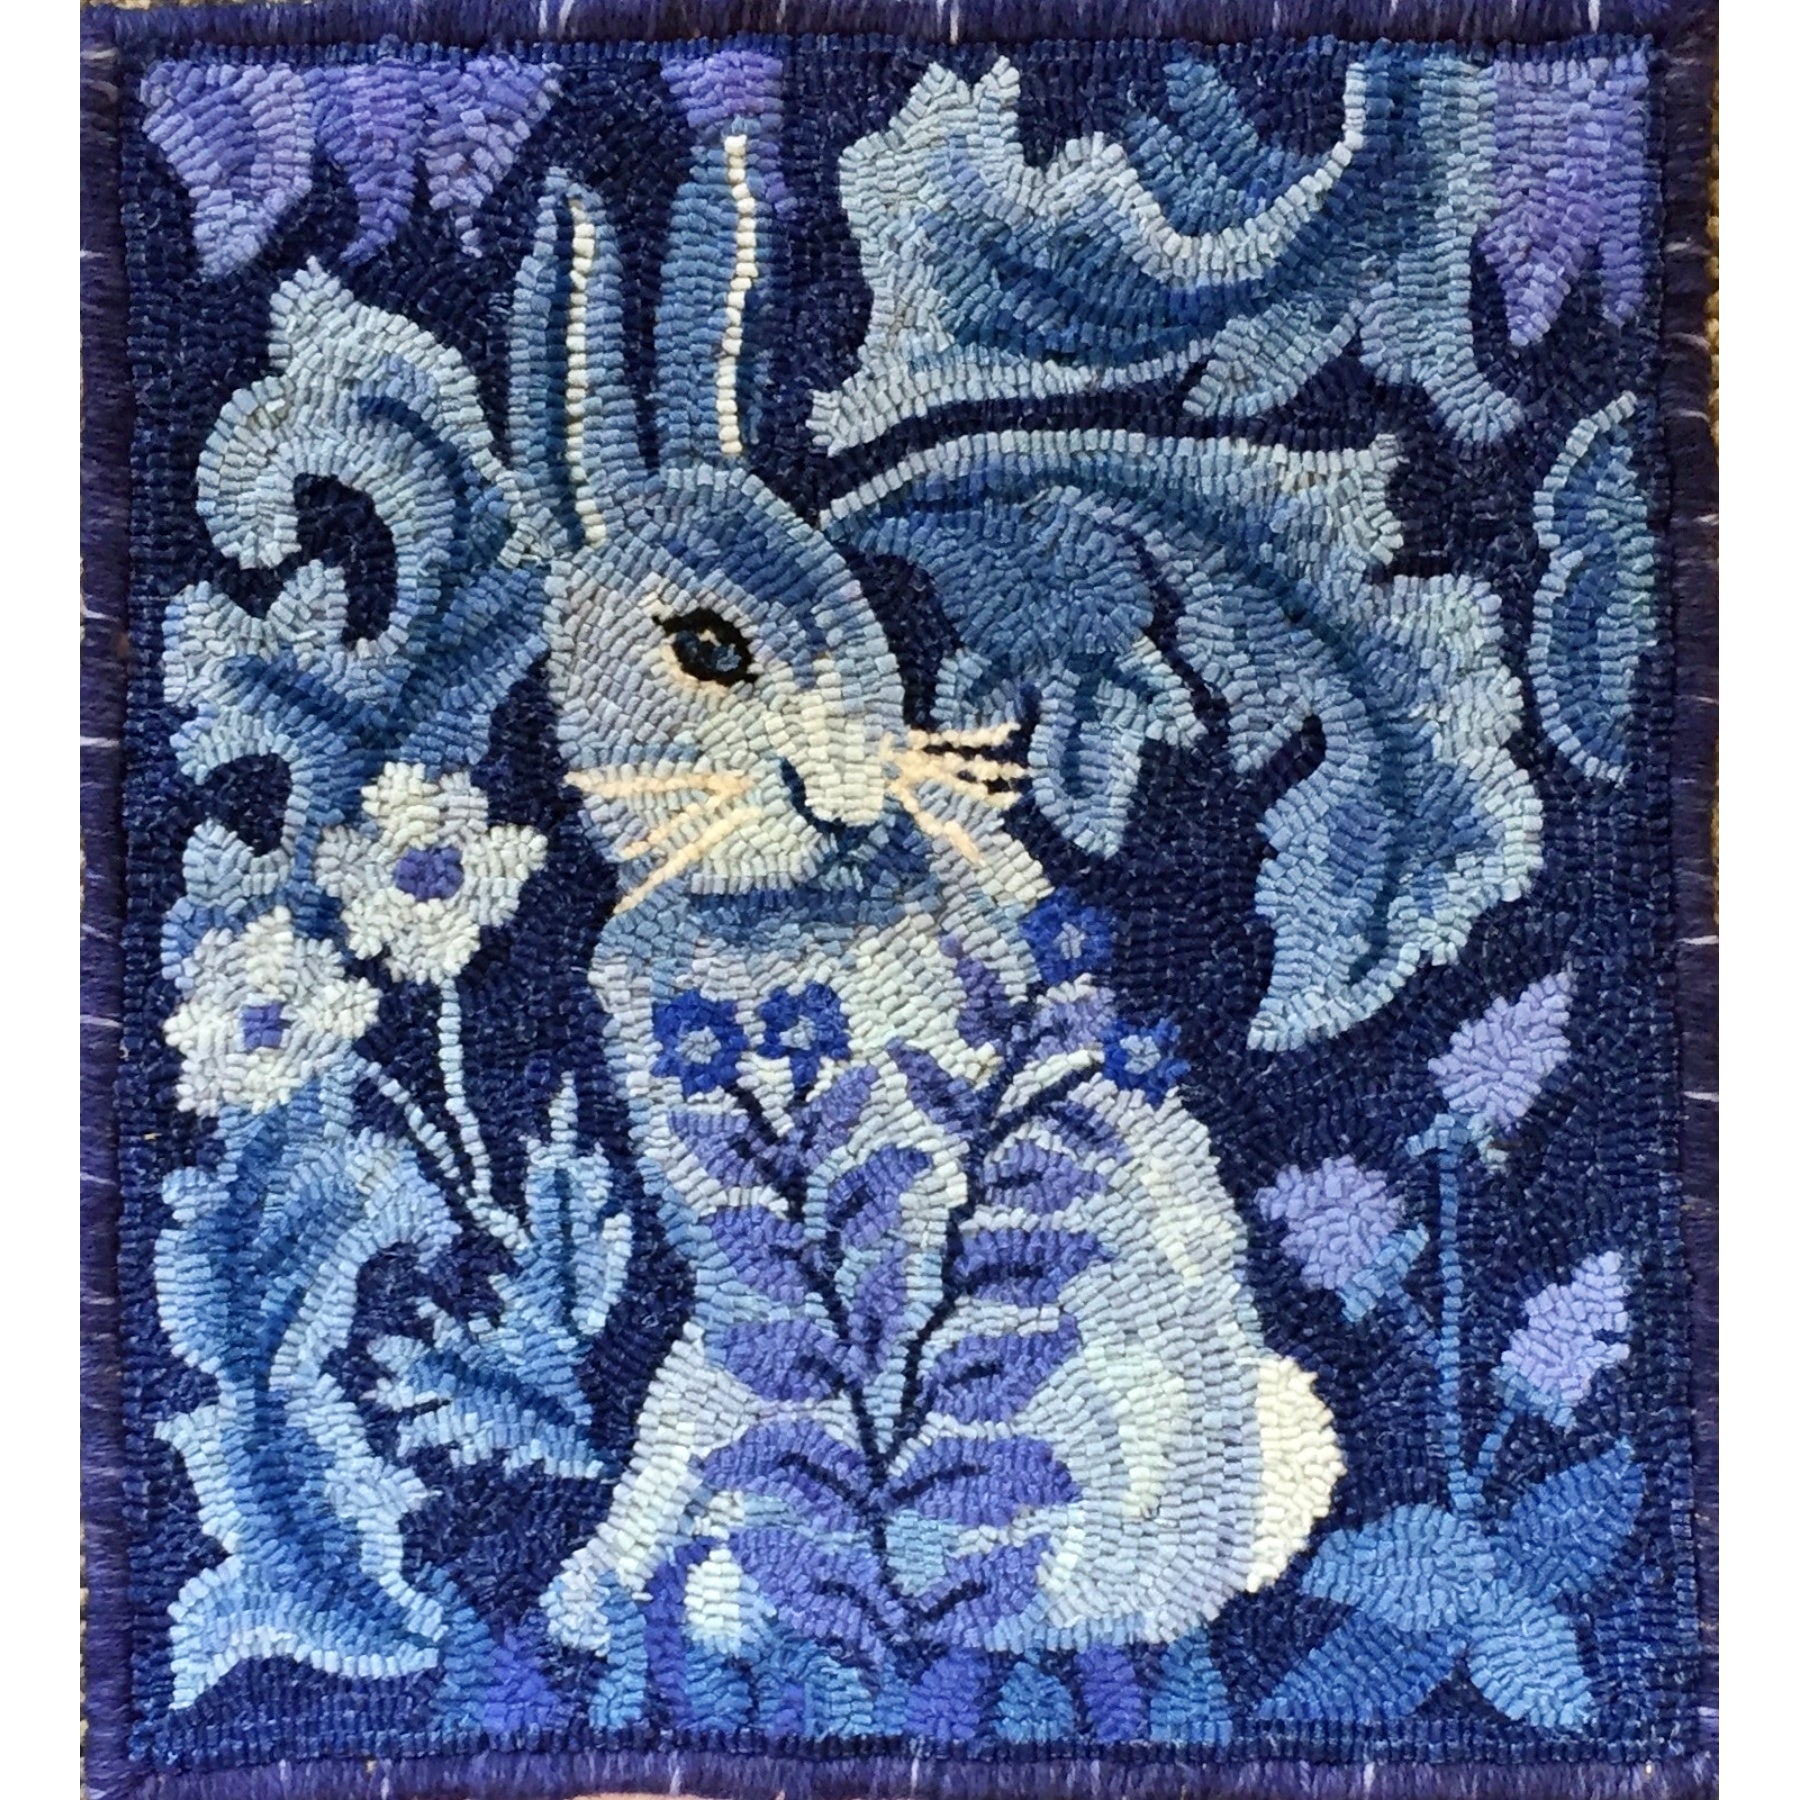 William Morris inspired Rug Hooking Patterns